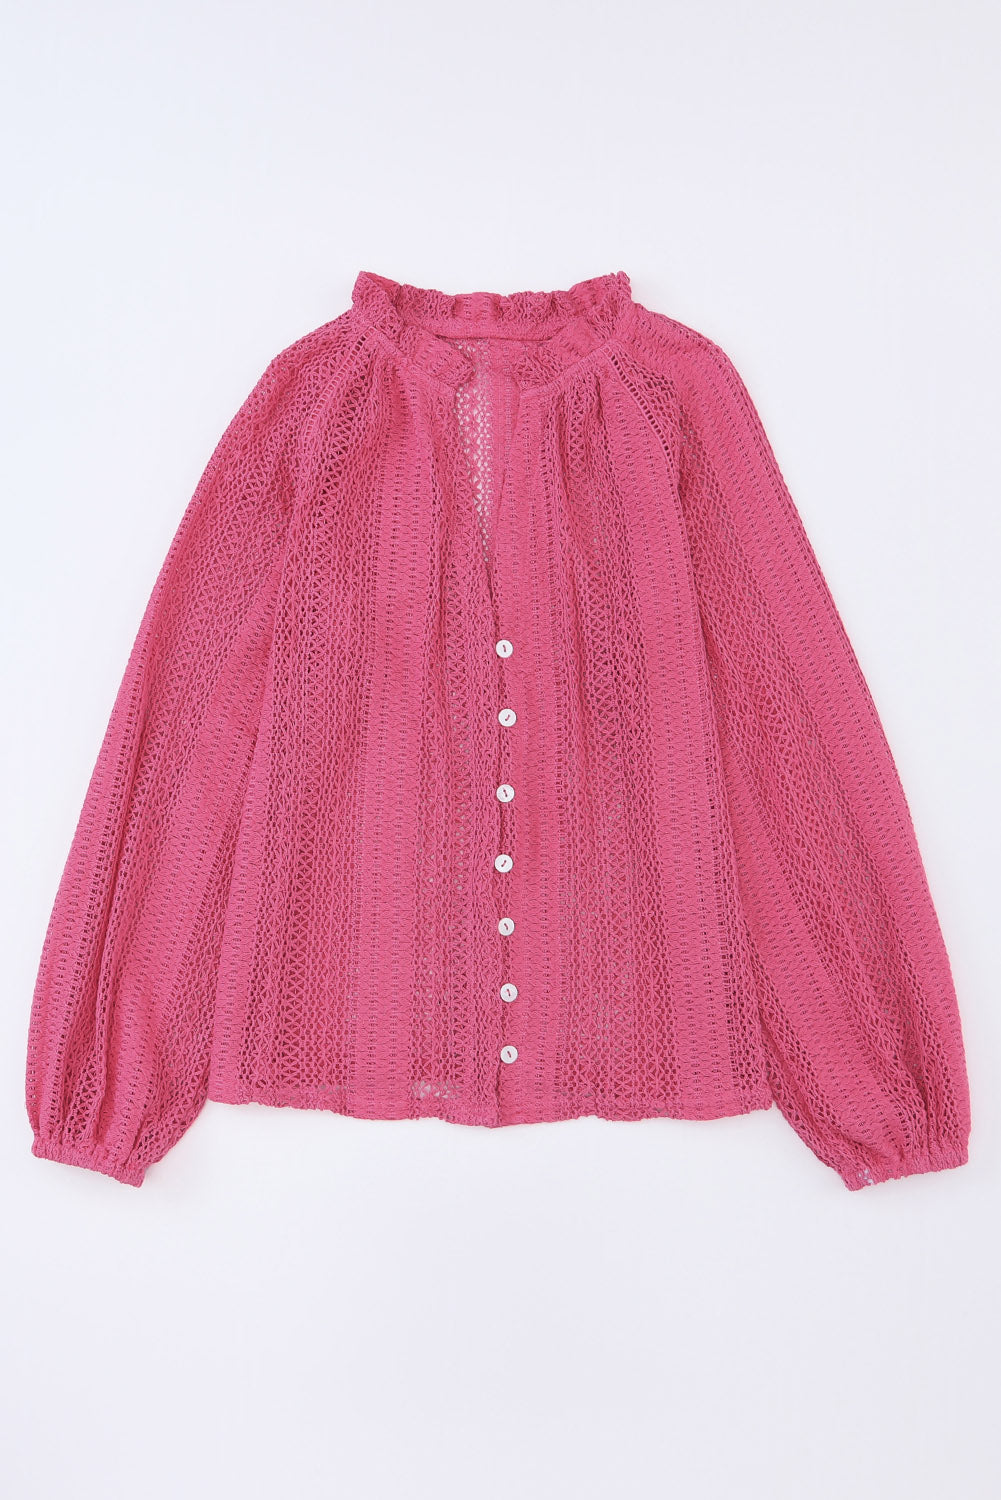 Rose V-Neck Long Sleeve Button Up Lace Shirt-4